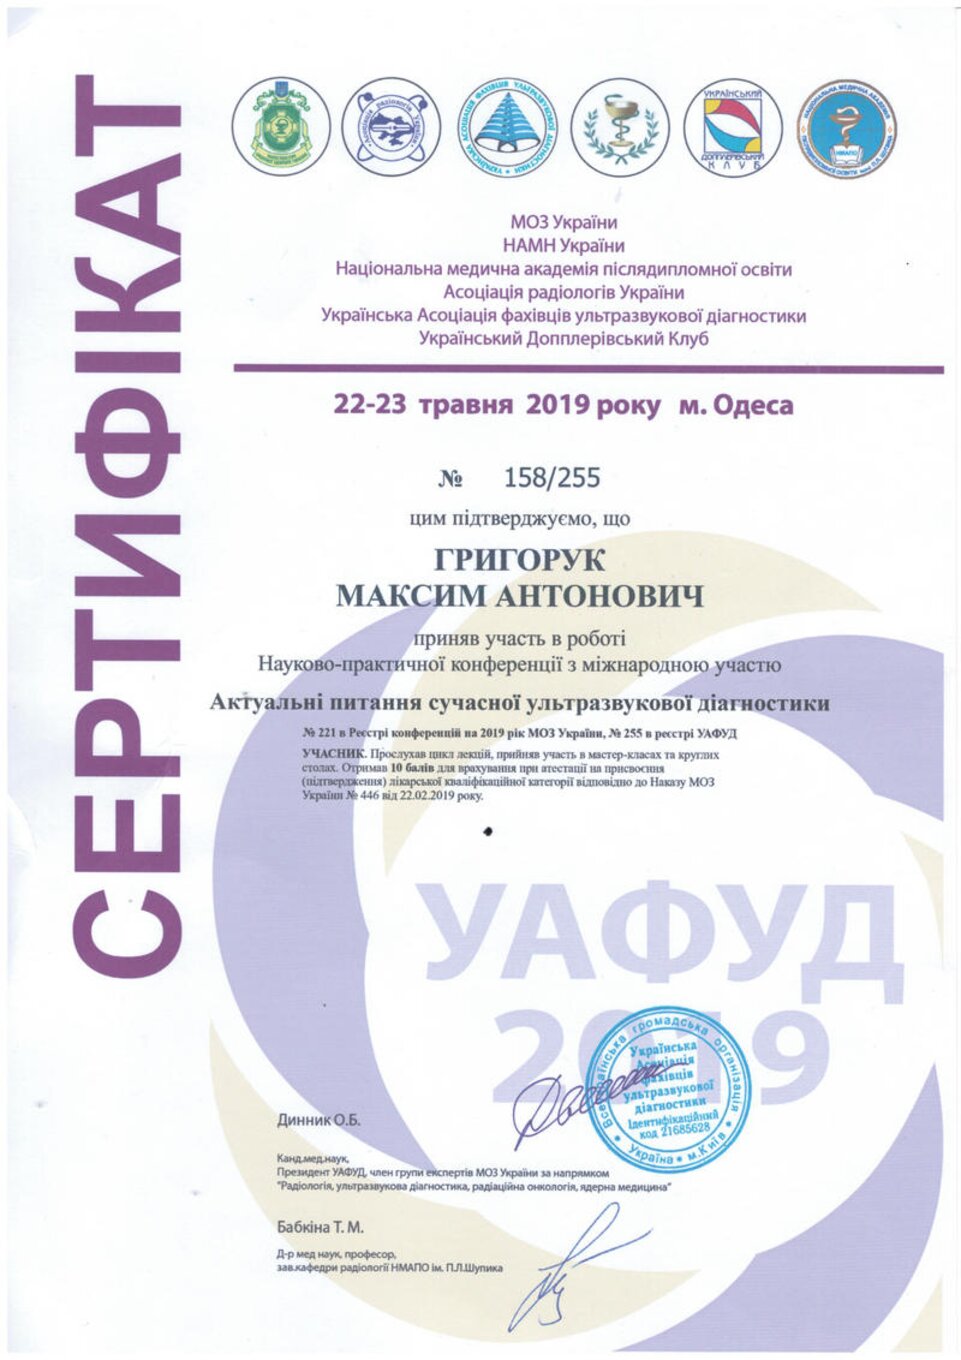 certificates/grigoruk-maksim-antonovich/hemomedika-cert-grigoruk-09.jpg